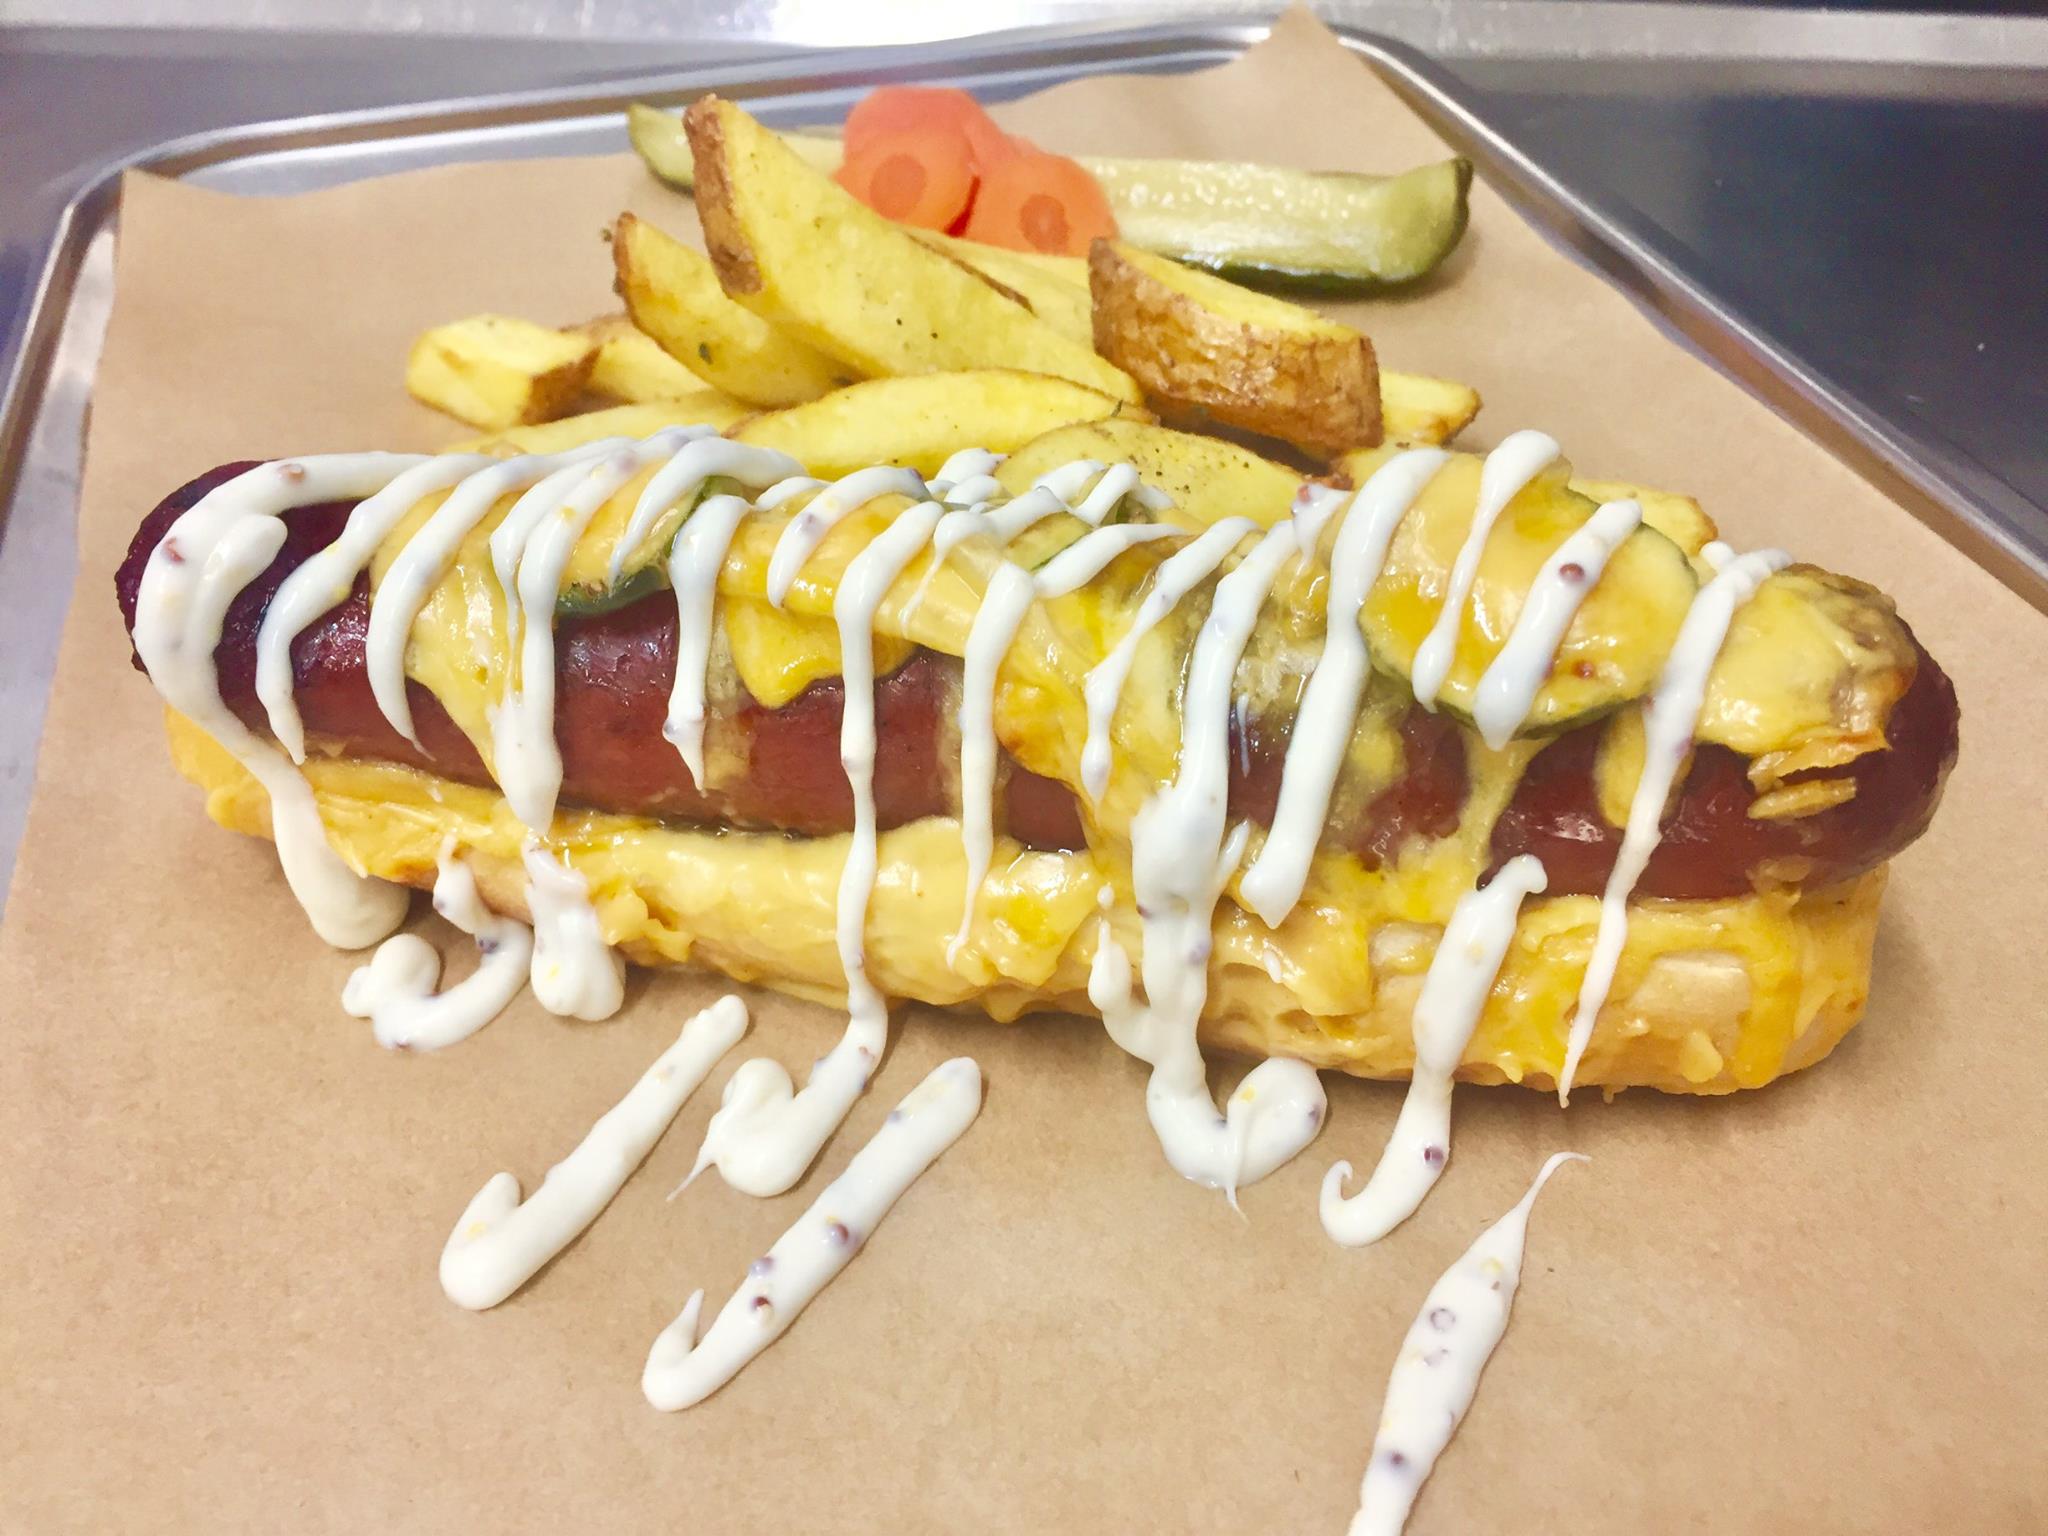 plato-perrito-hot-dog-verdura-patatas-restaurante-jimbo-smokehouse-madrid.jpg